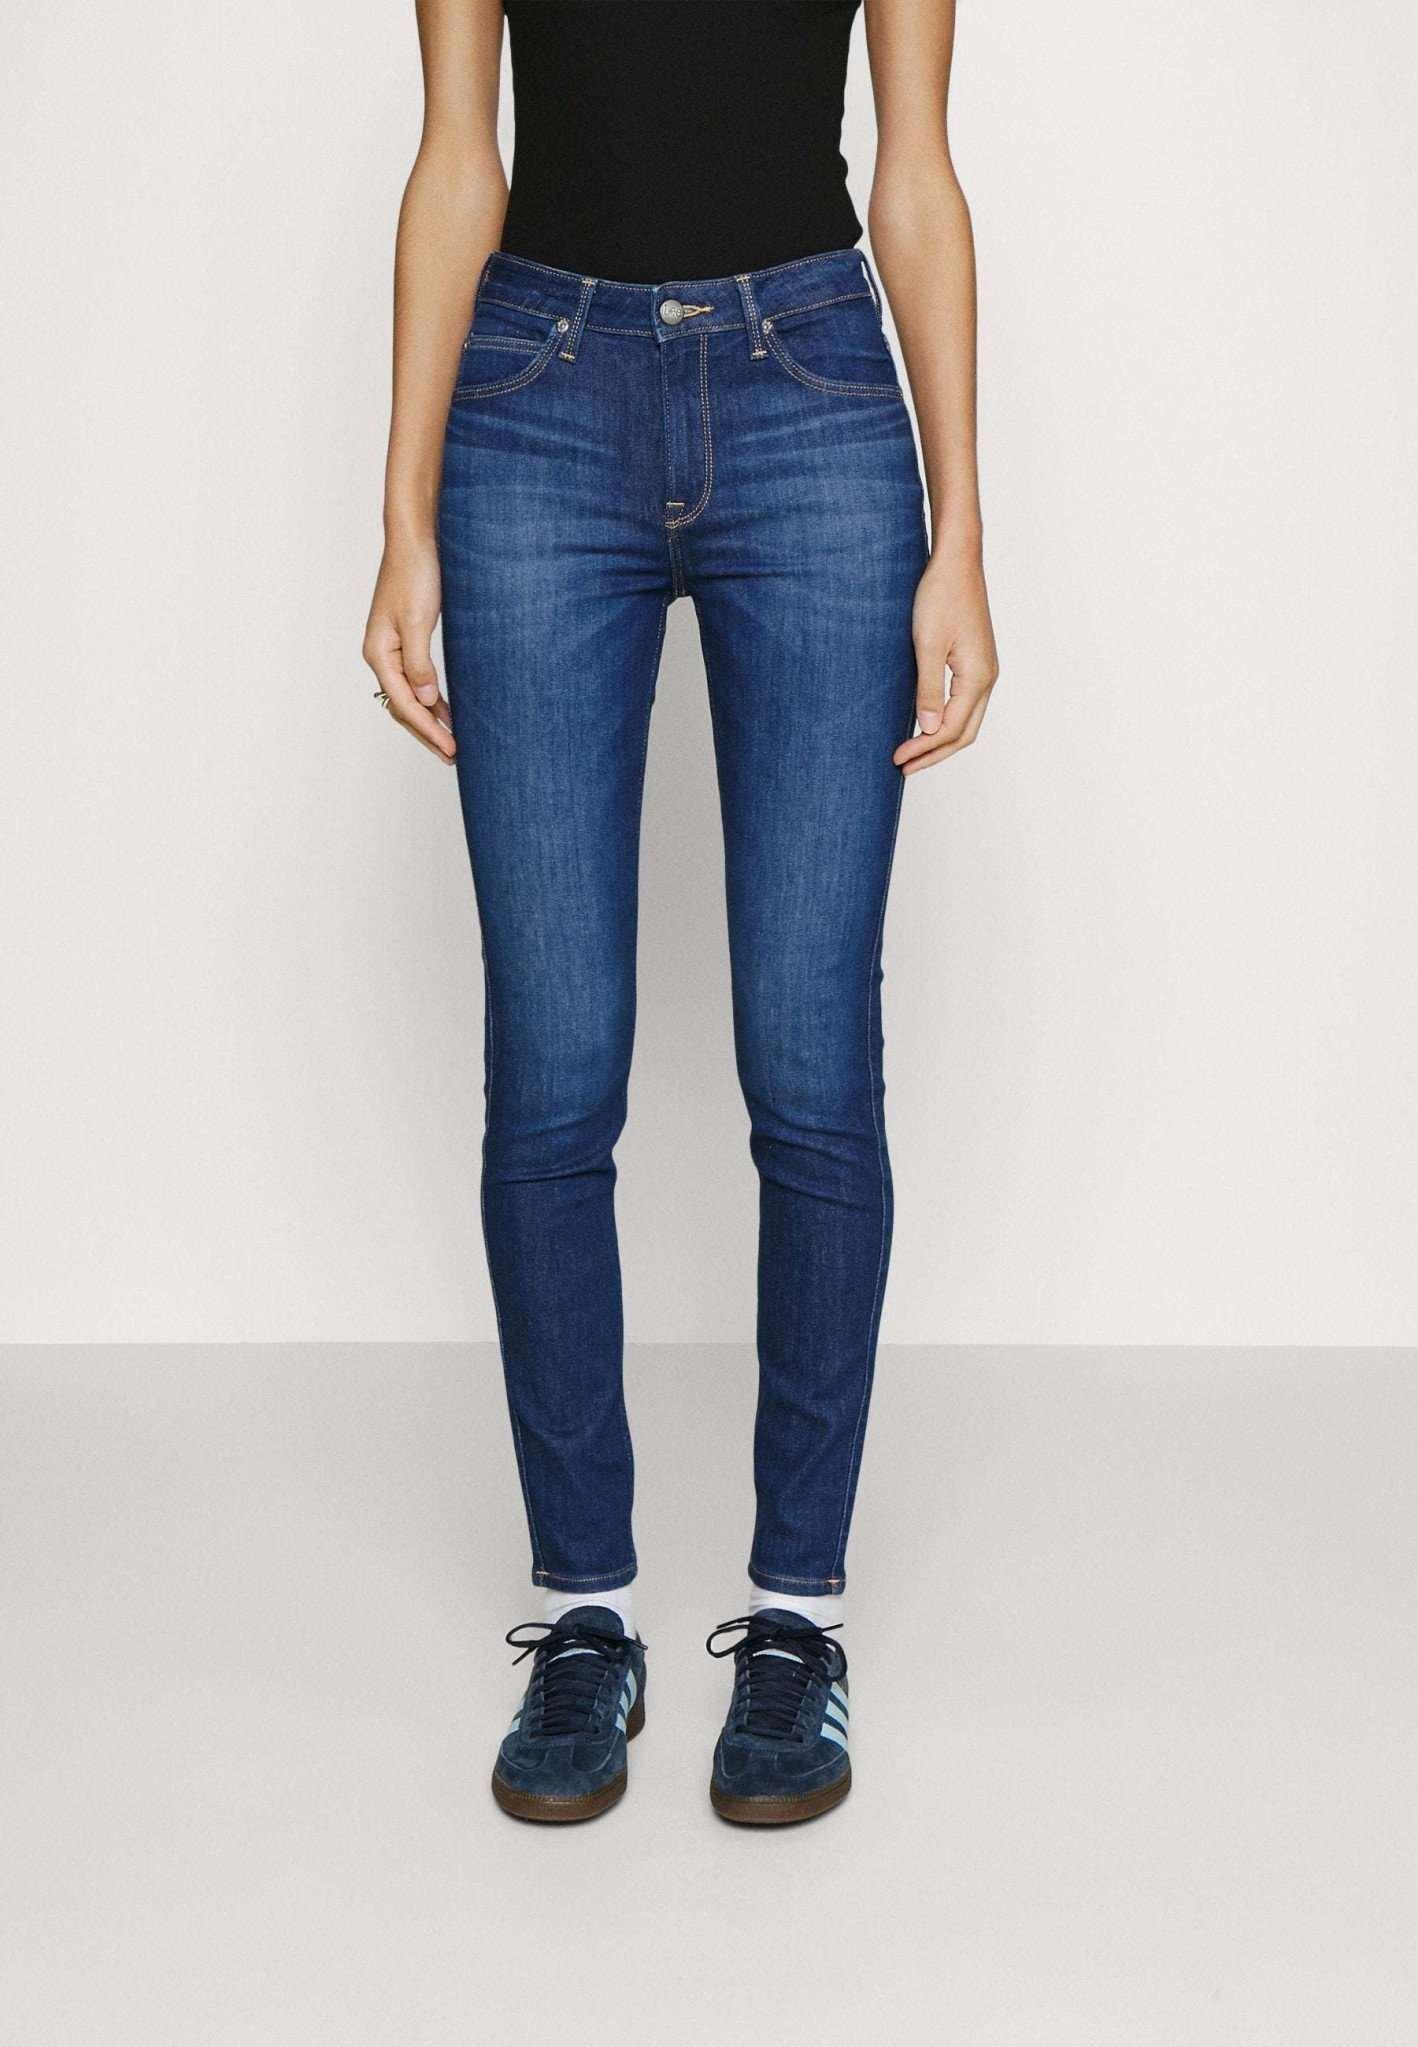 Jeans Skinny Fit Scarlett High Damen Blau L33/W30 von Lee